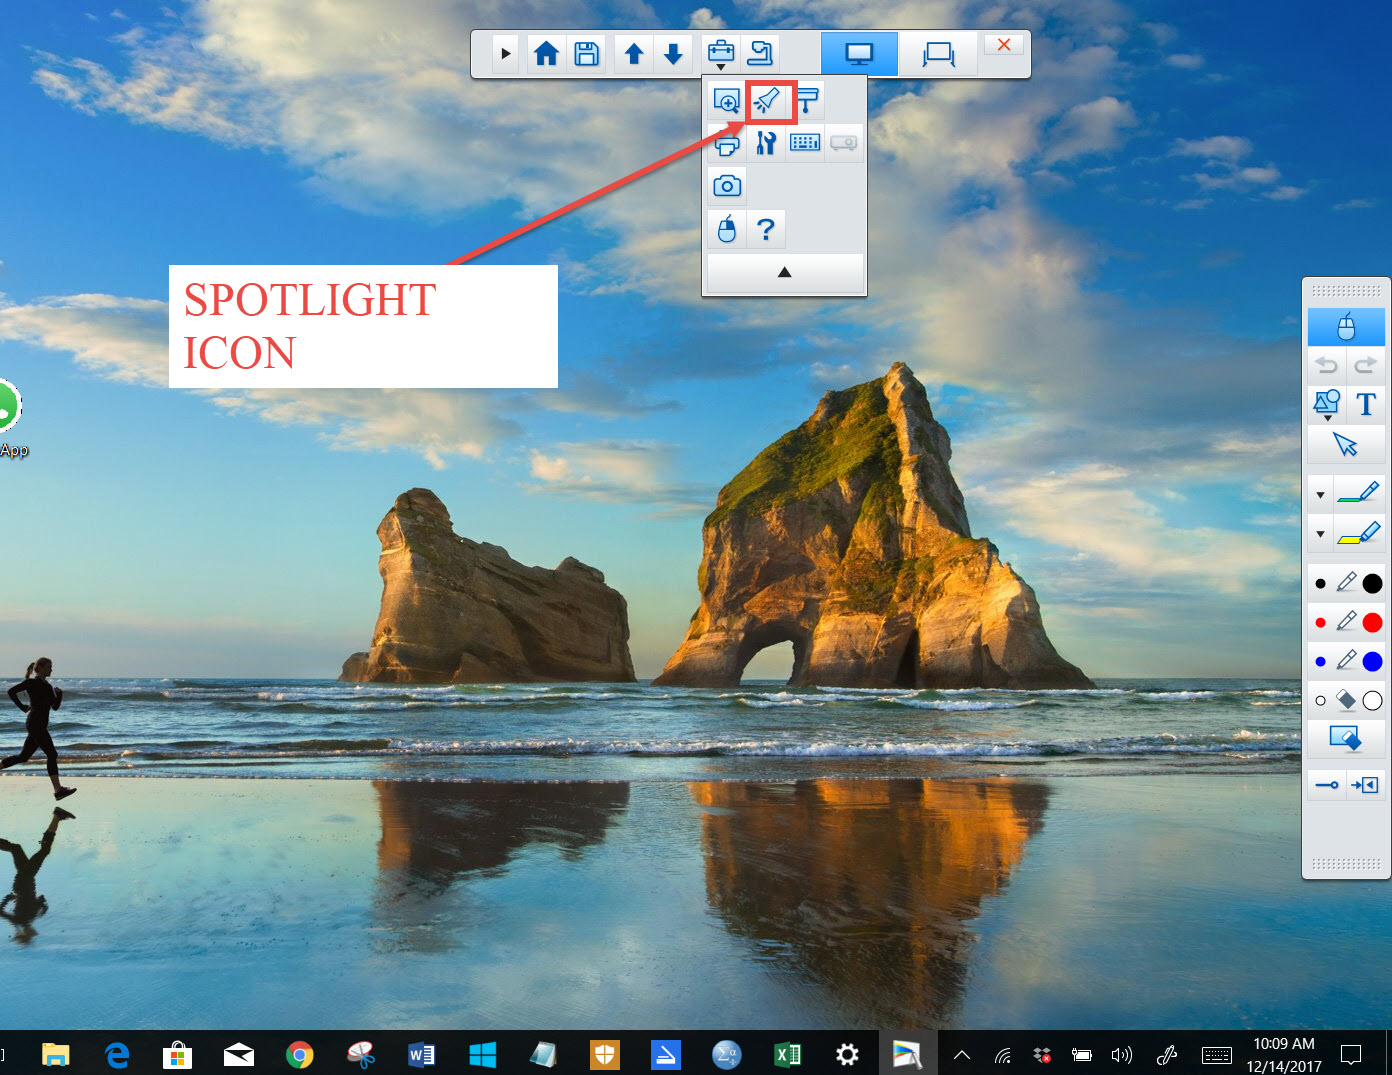 Select spotlight icon